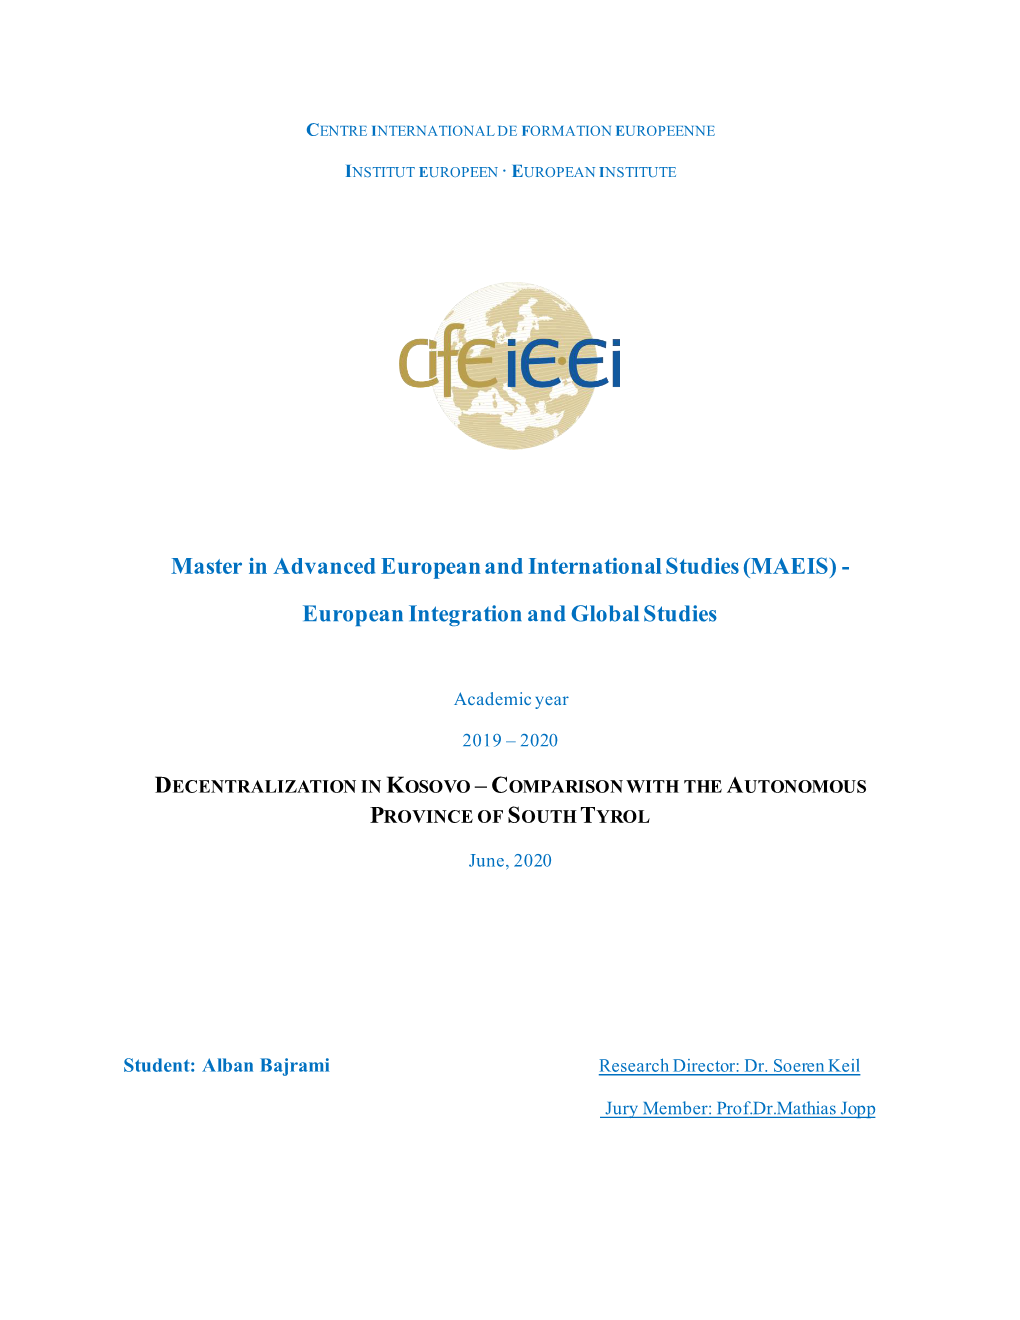 (MAEIS) - European Integration and Global Studies